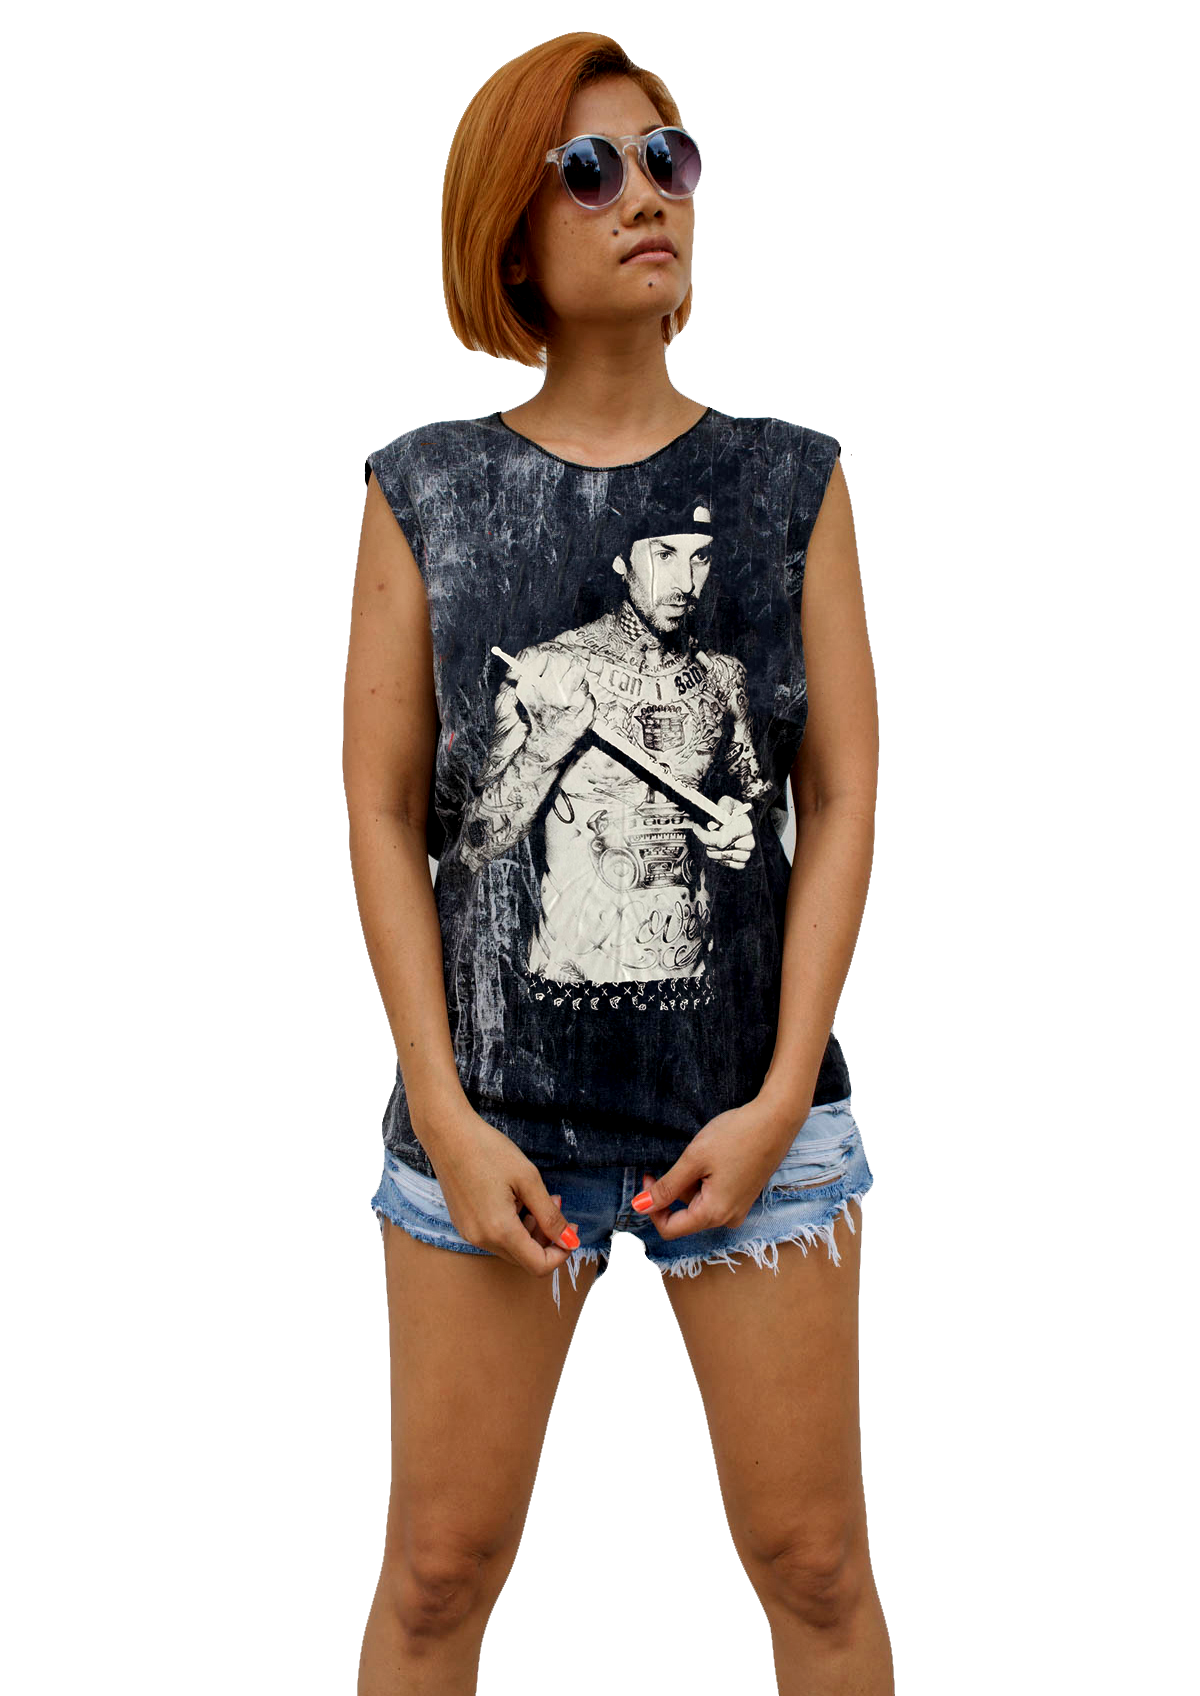 Ladies Travis Barker Vest Tank-Top Singlet Sleeveless T-Shirt